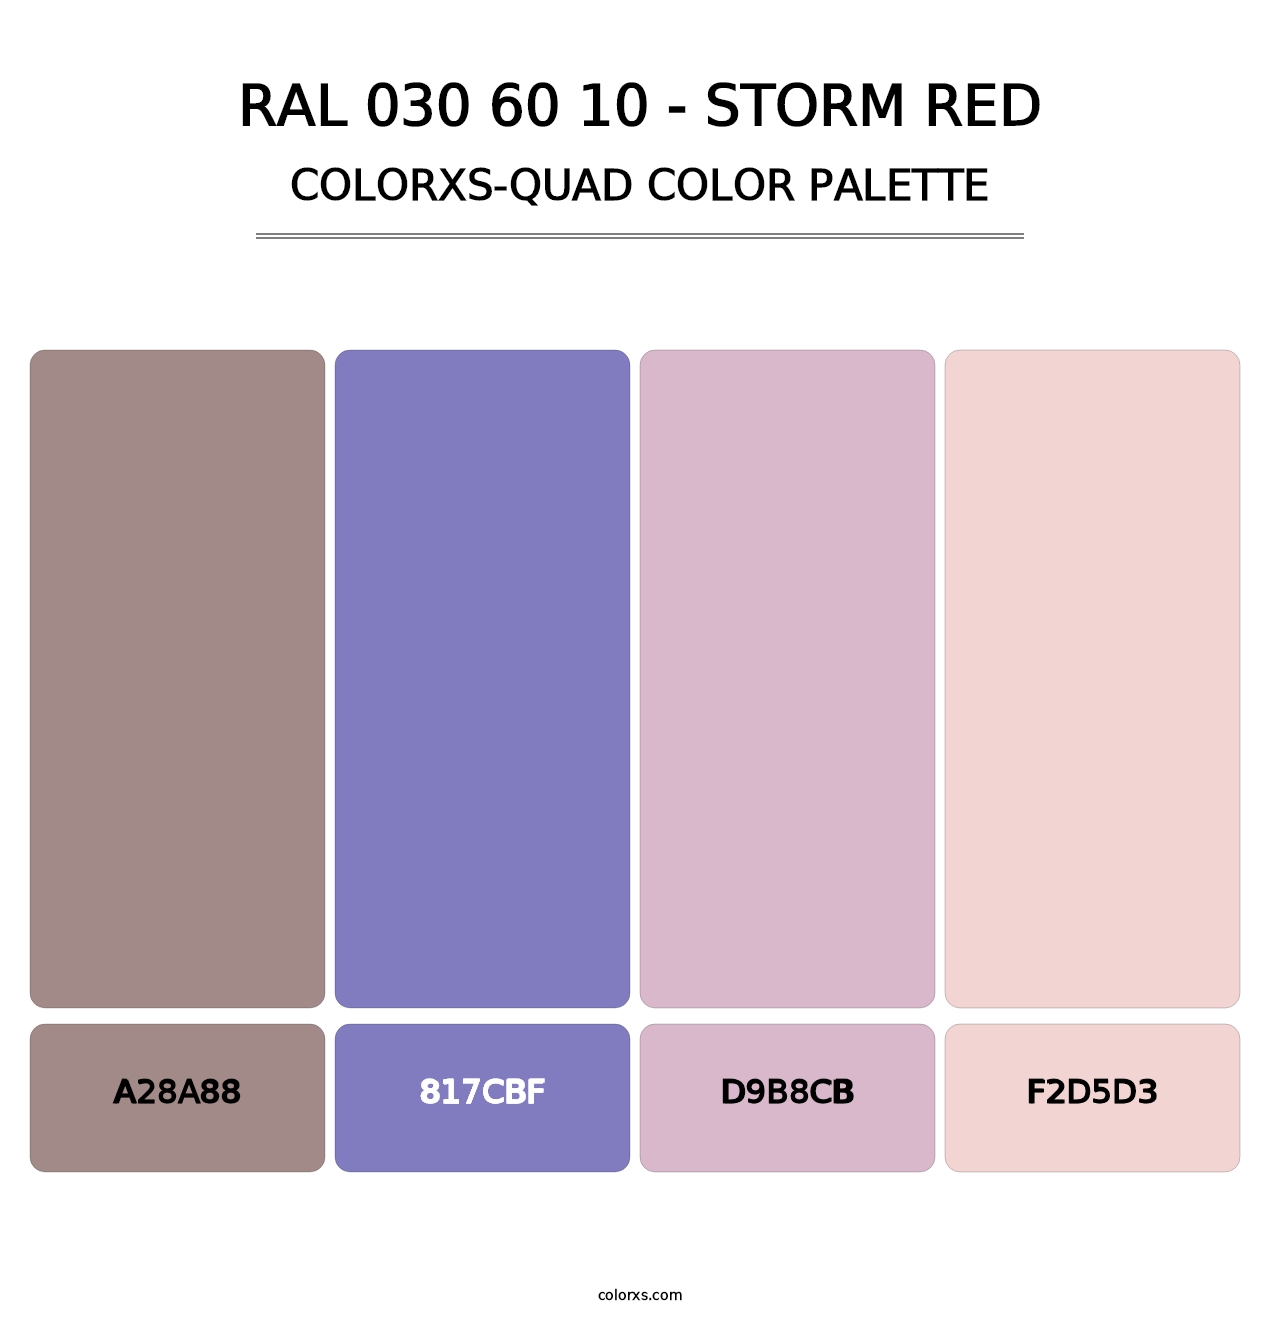 RAL 030 60 10 - Storm Red - Colorxs Quad Palette